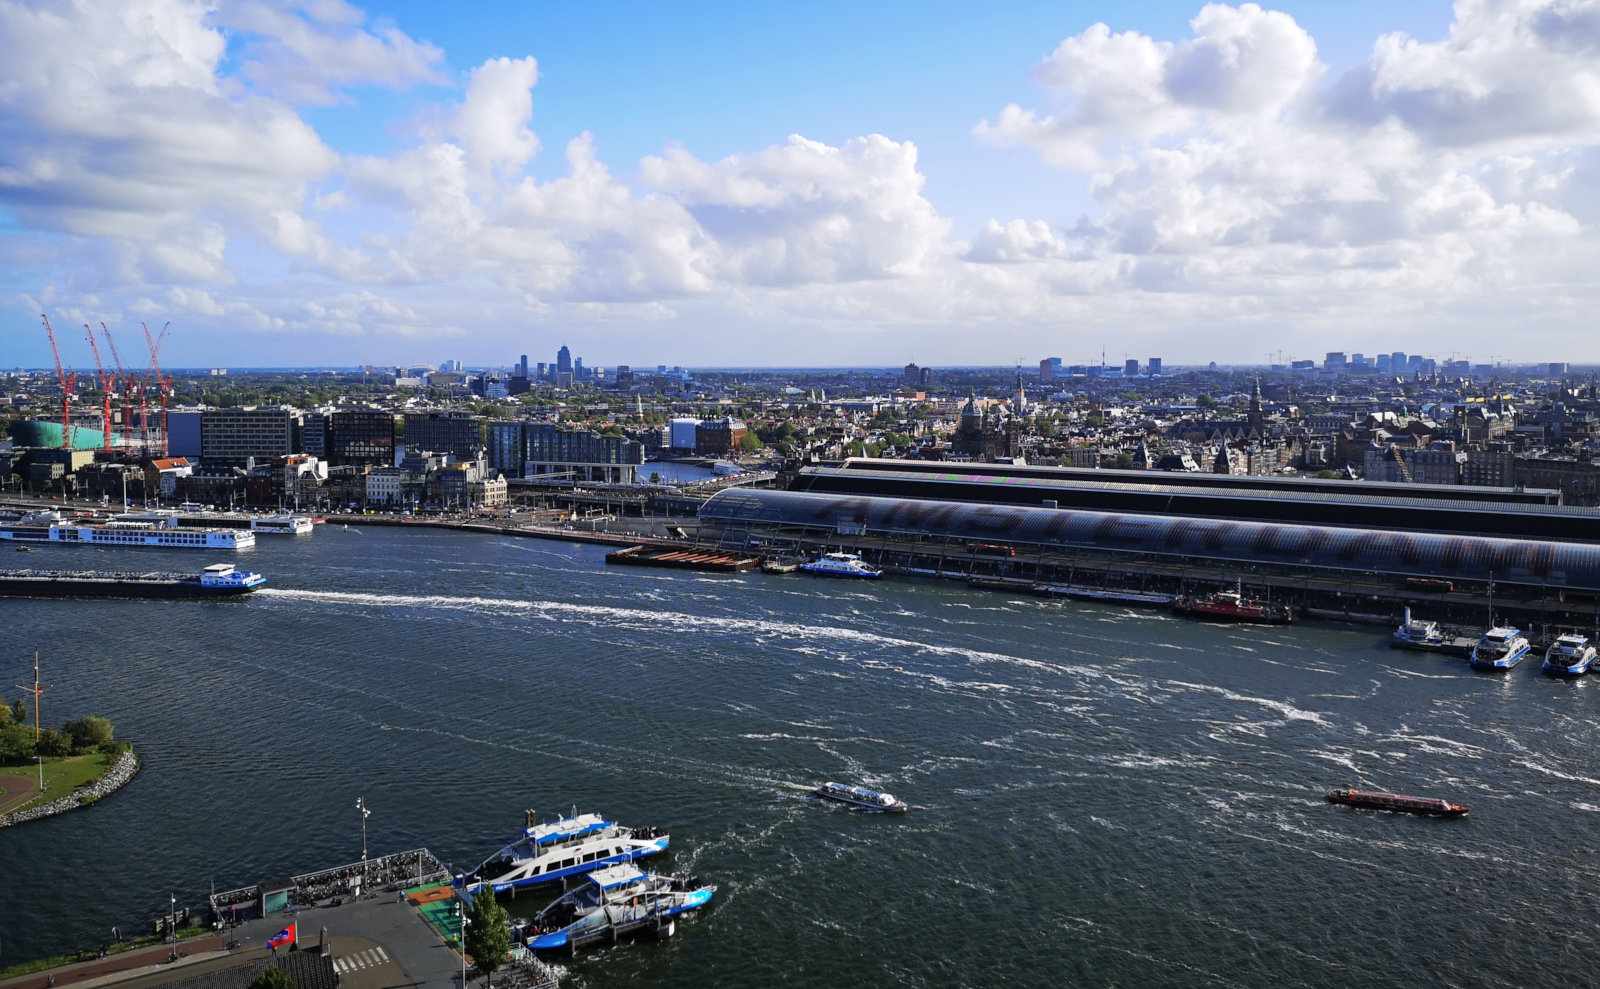 How to Experience A'DAM Toren AKA Amsterdam Tower